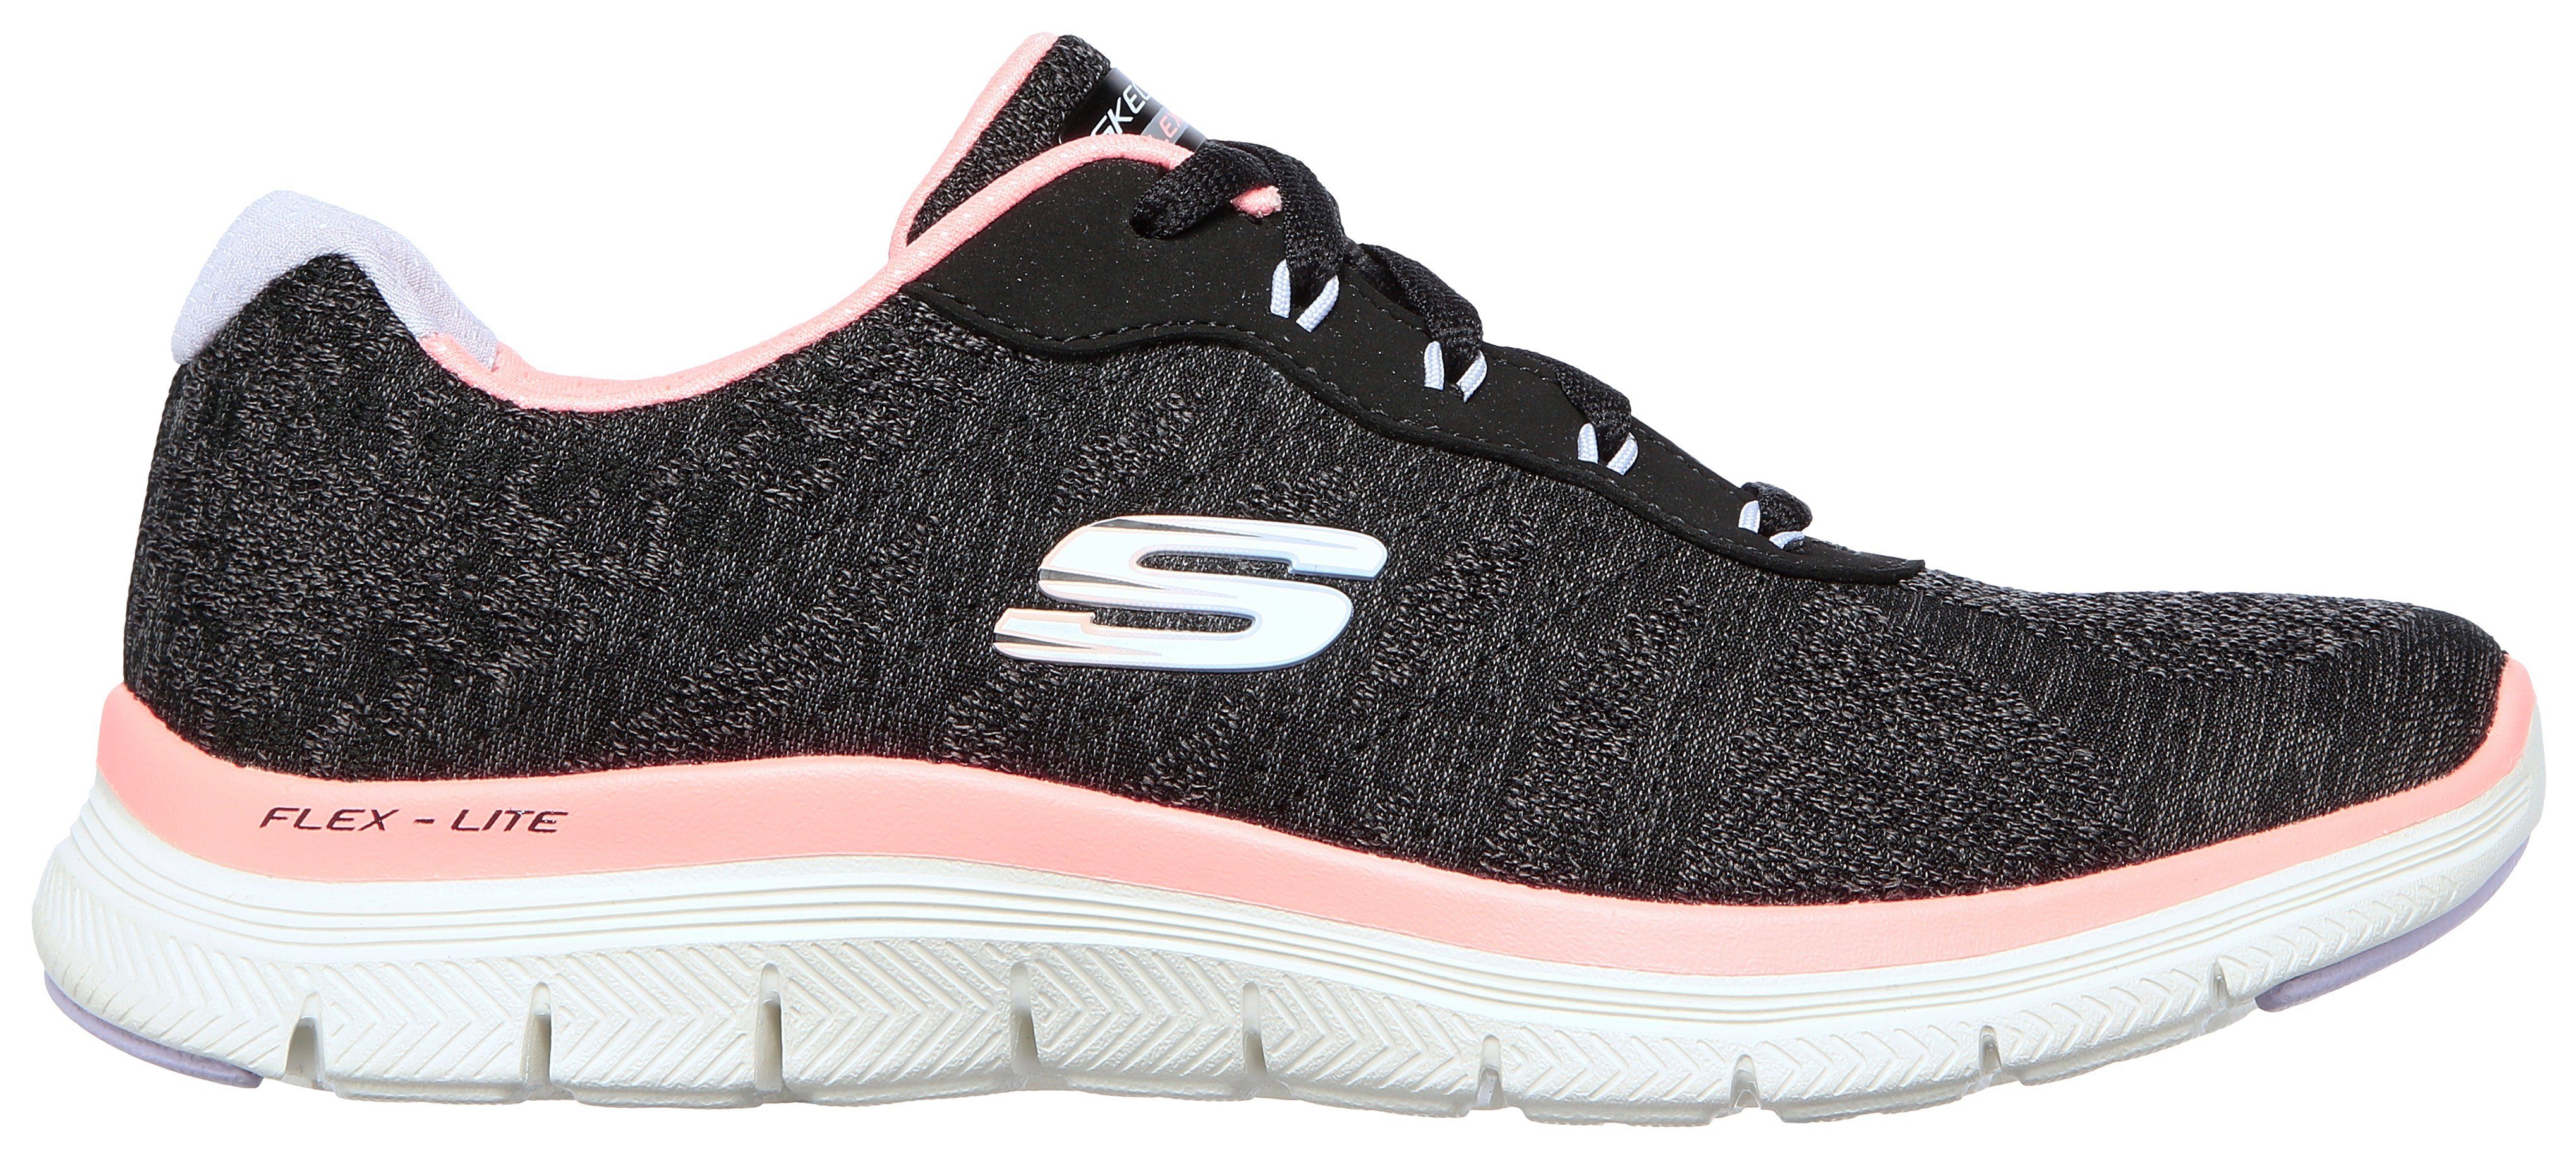 mit Foam MOVE Cooled 4.0 schwarz-koralle Sneaker Skechers APEEAL FRESH Memory Air FLEX